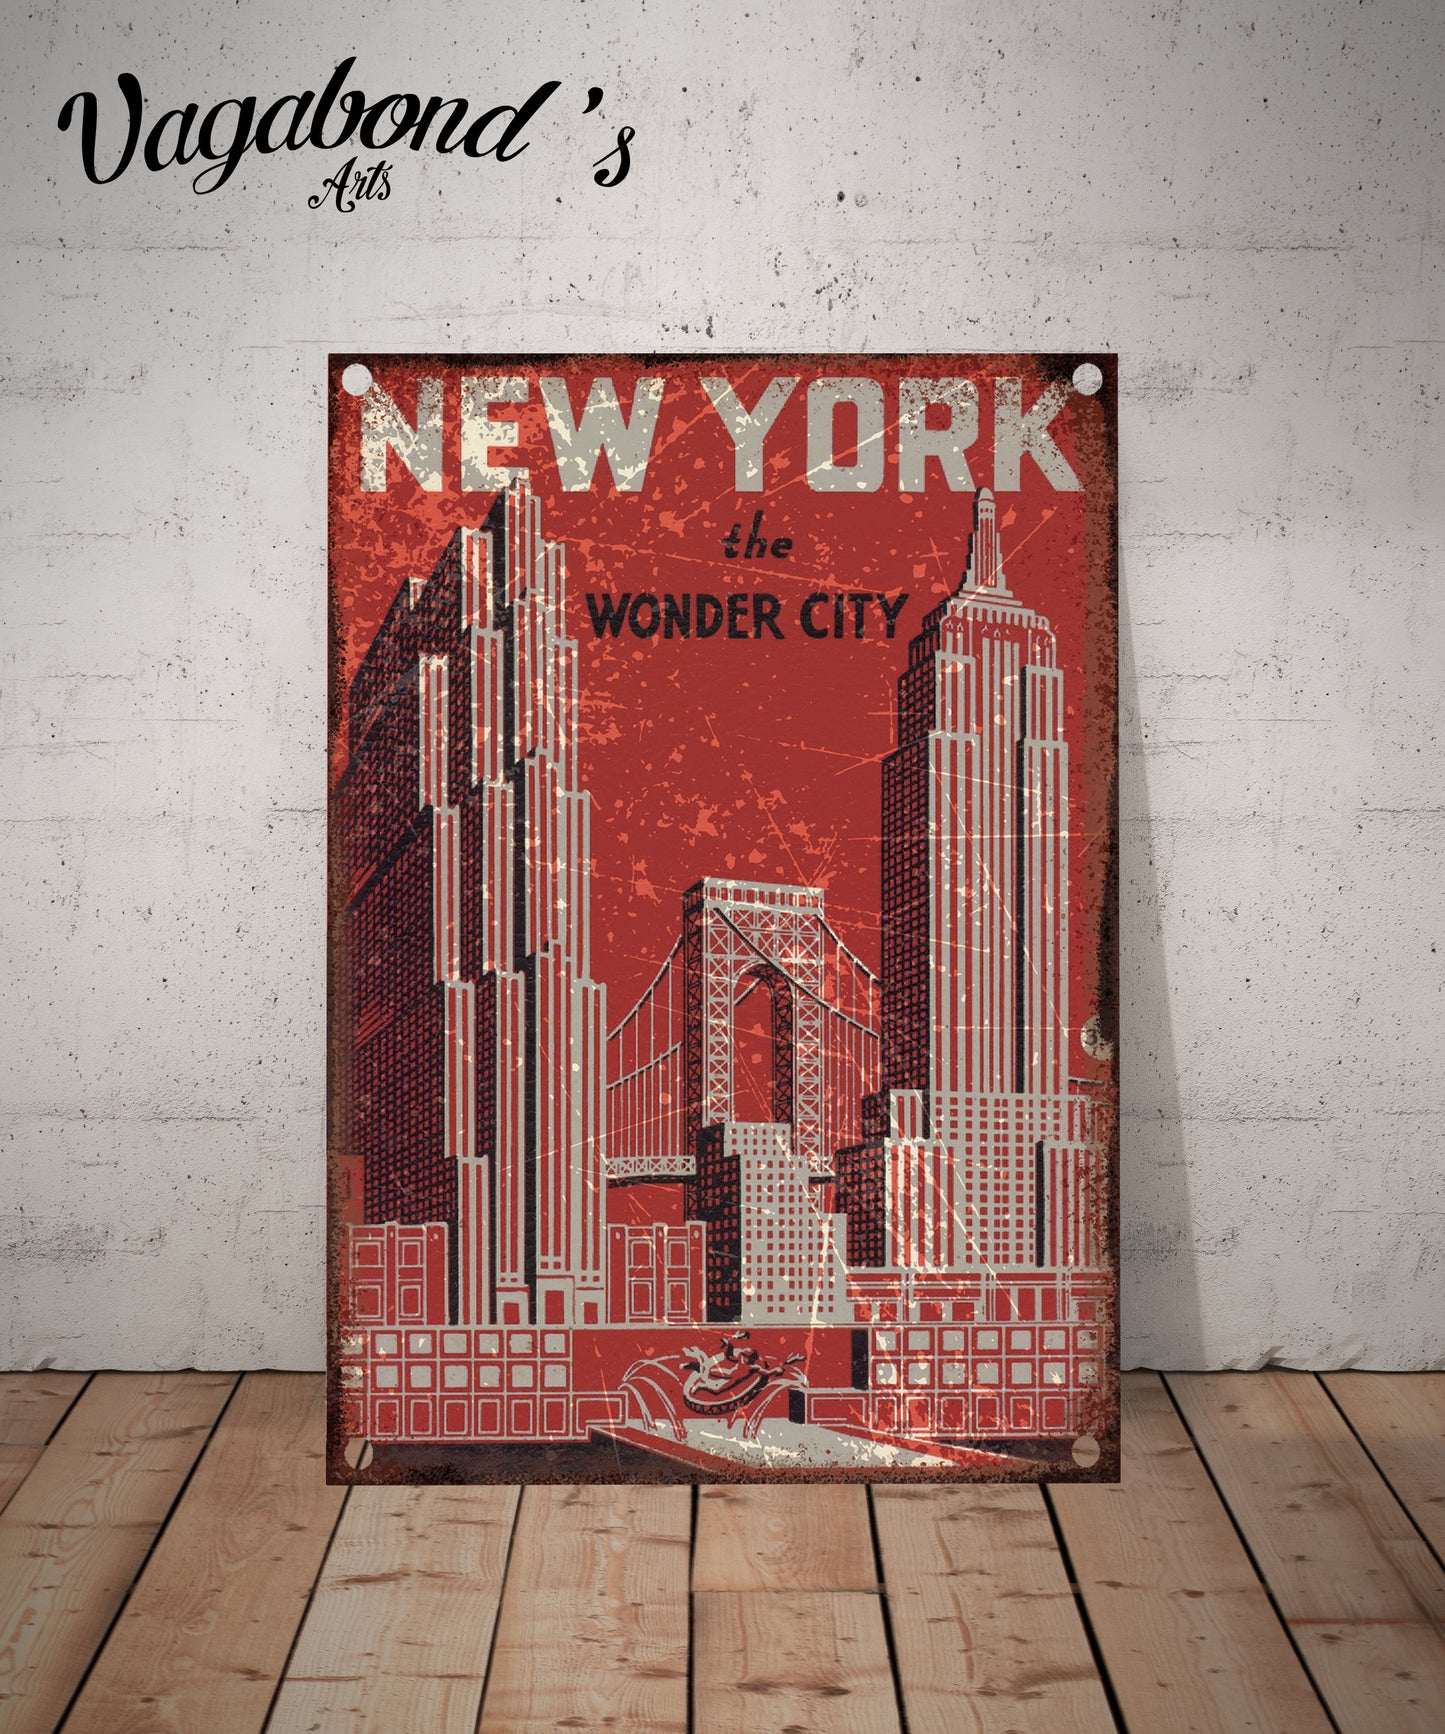 Vintage New York The Wonder City Metal Sign - Vagabonds Arts 